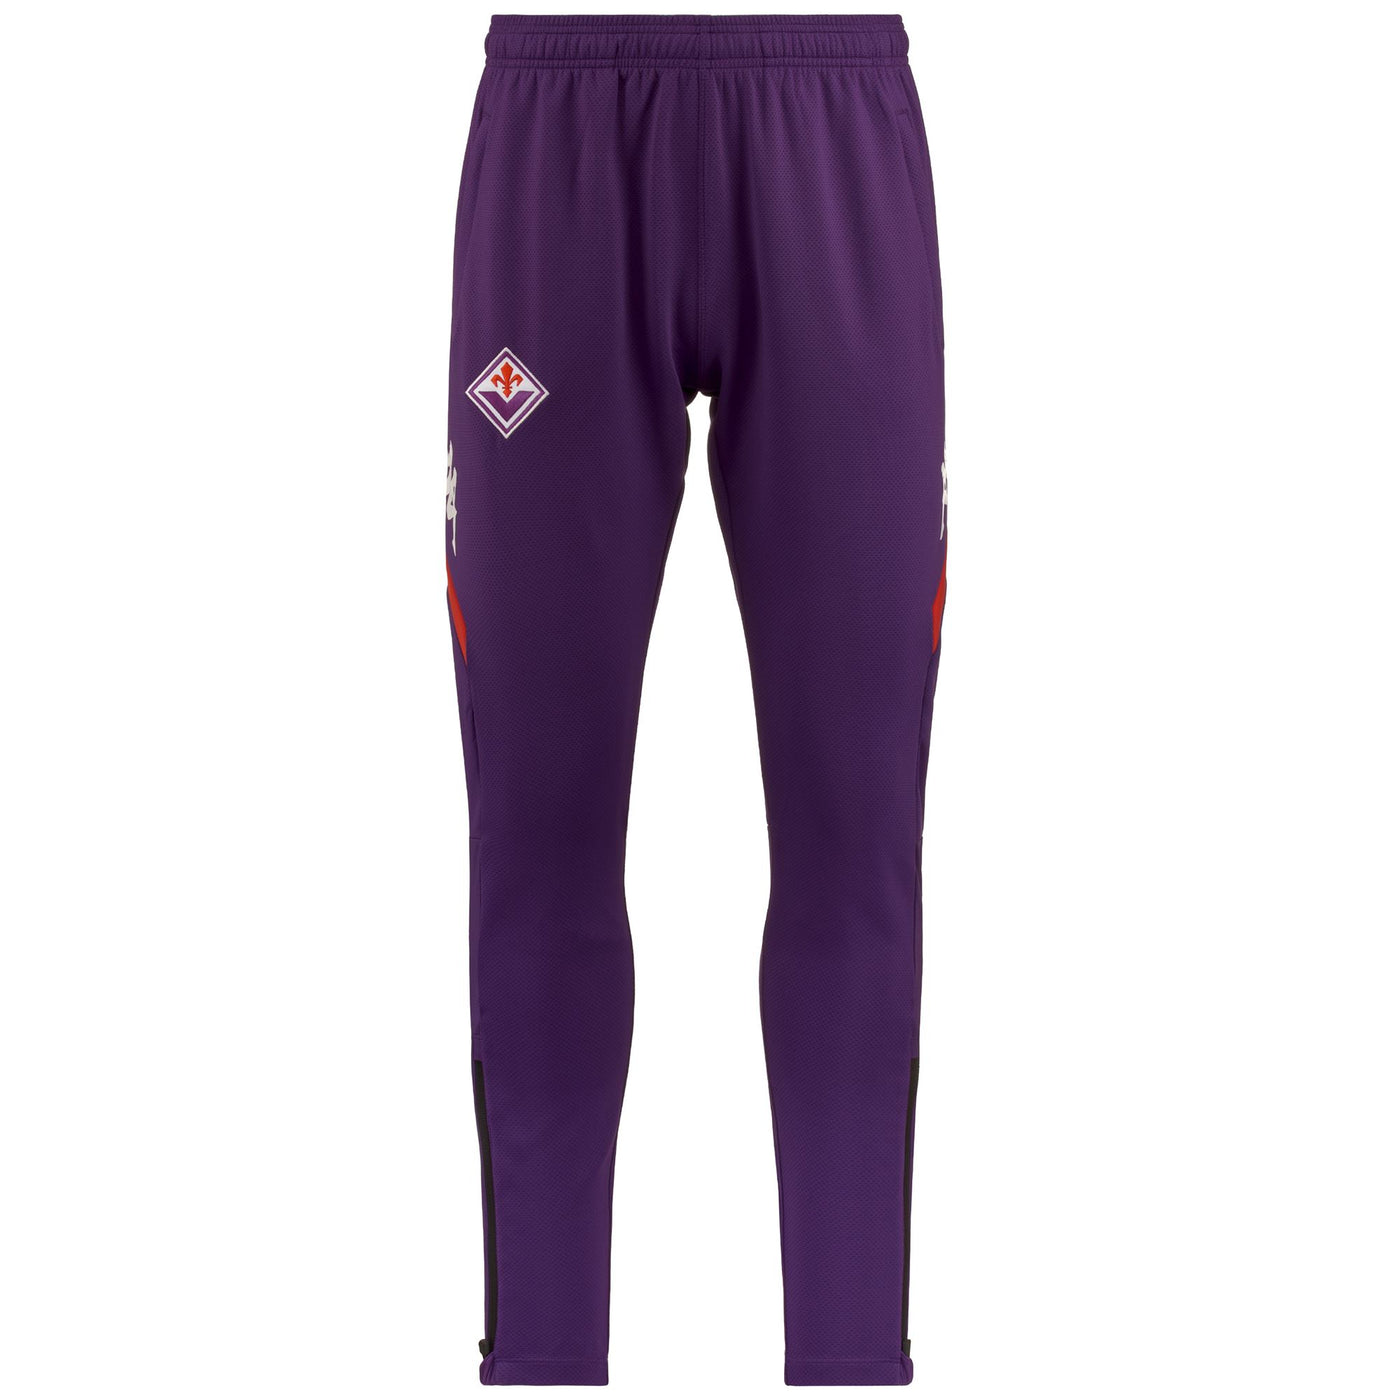 Pants Man ABUNSZIP PRO 6 FIORENTINA Sport Trousers Violet Indigo-Red Blaze | kappa Photo (jpg Rgb)			